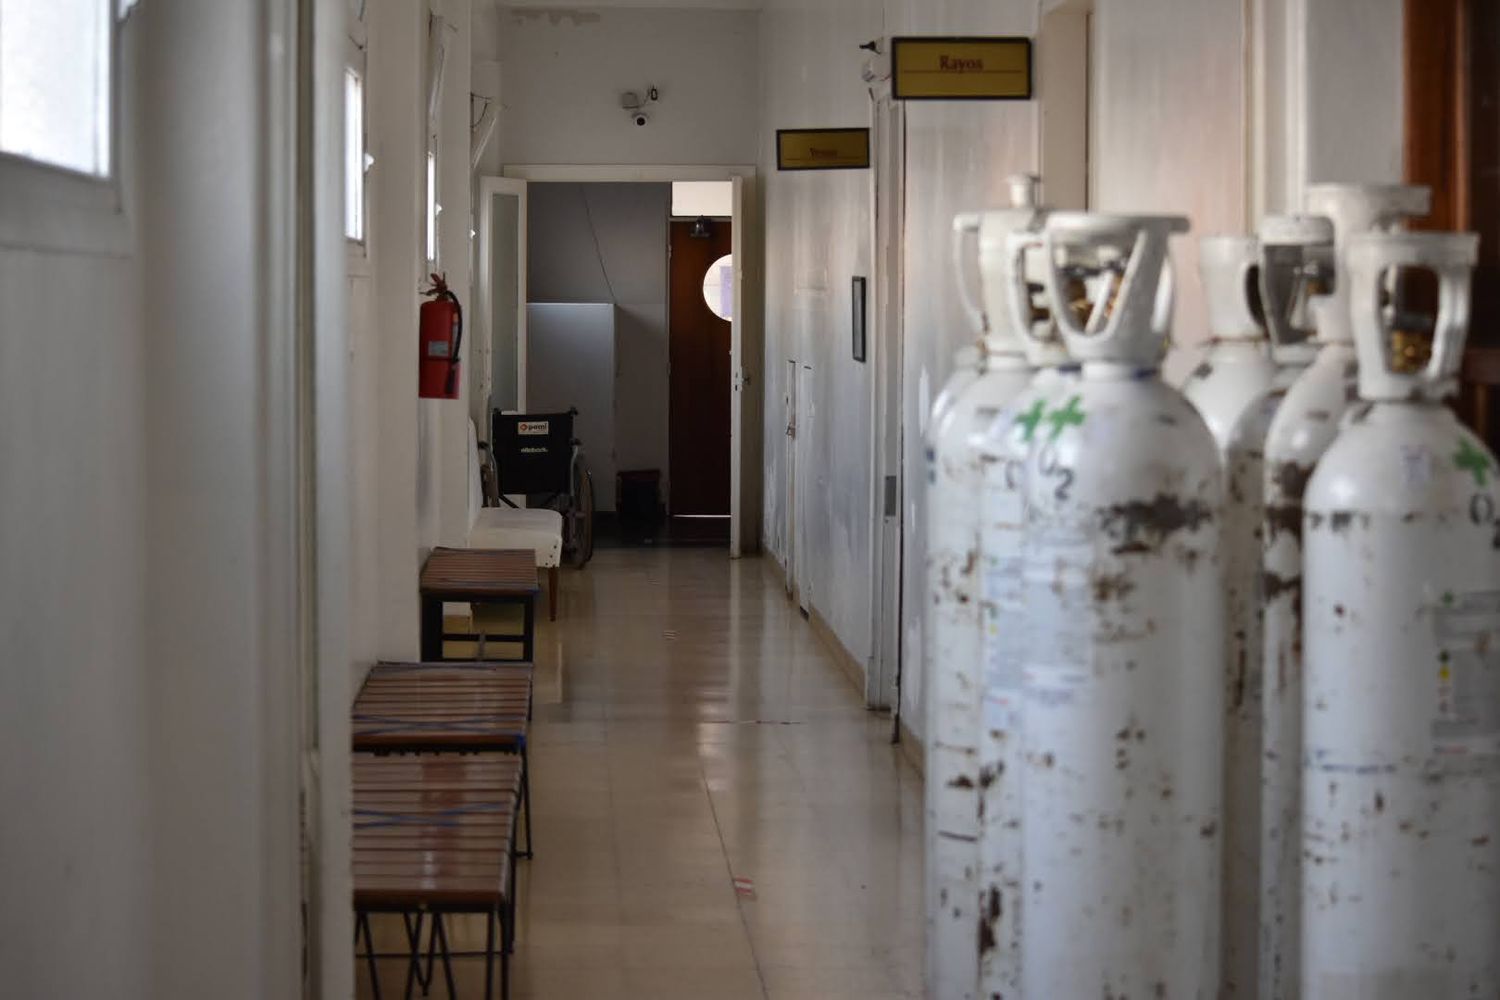 Clínica San Pedro: “Había una sola enfermera para atender a diez o doce pacientes”